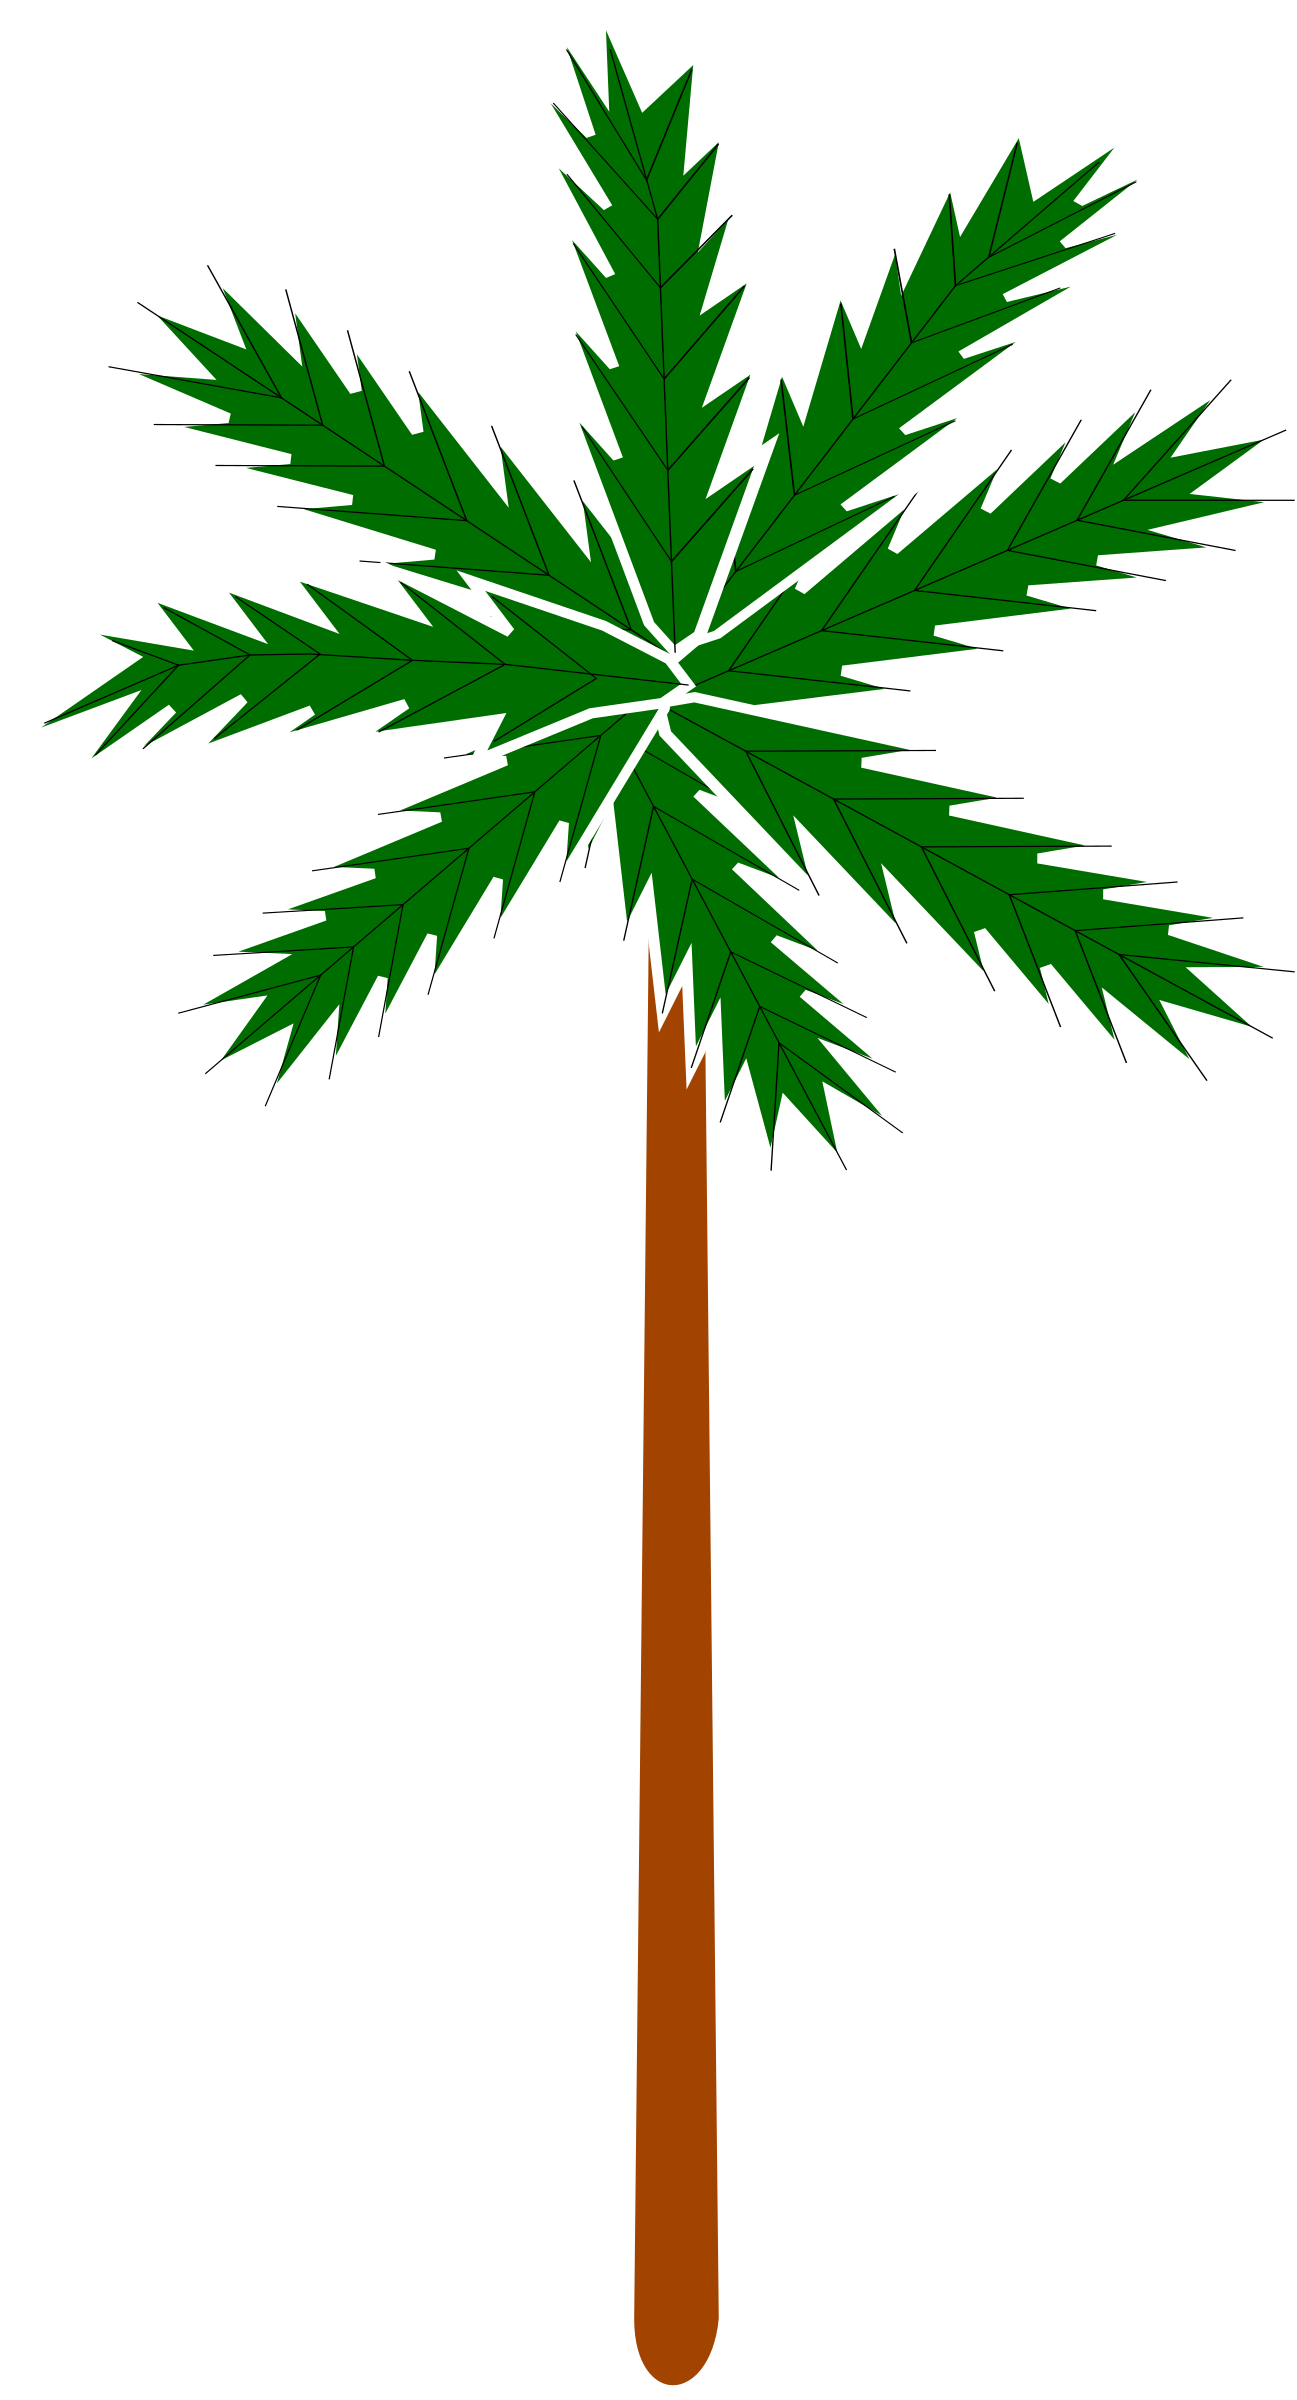 clipart ocean palm tree